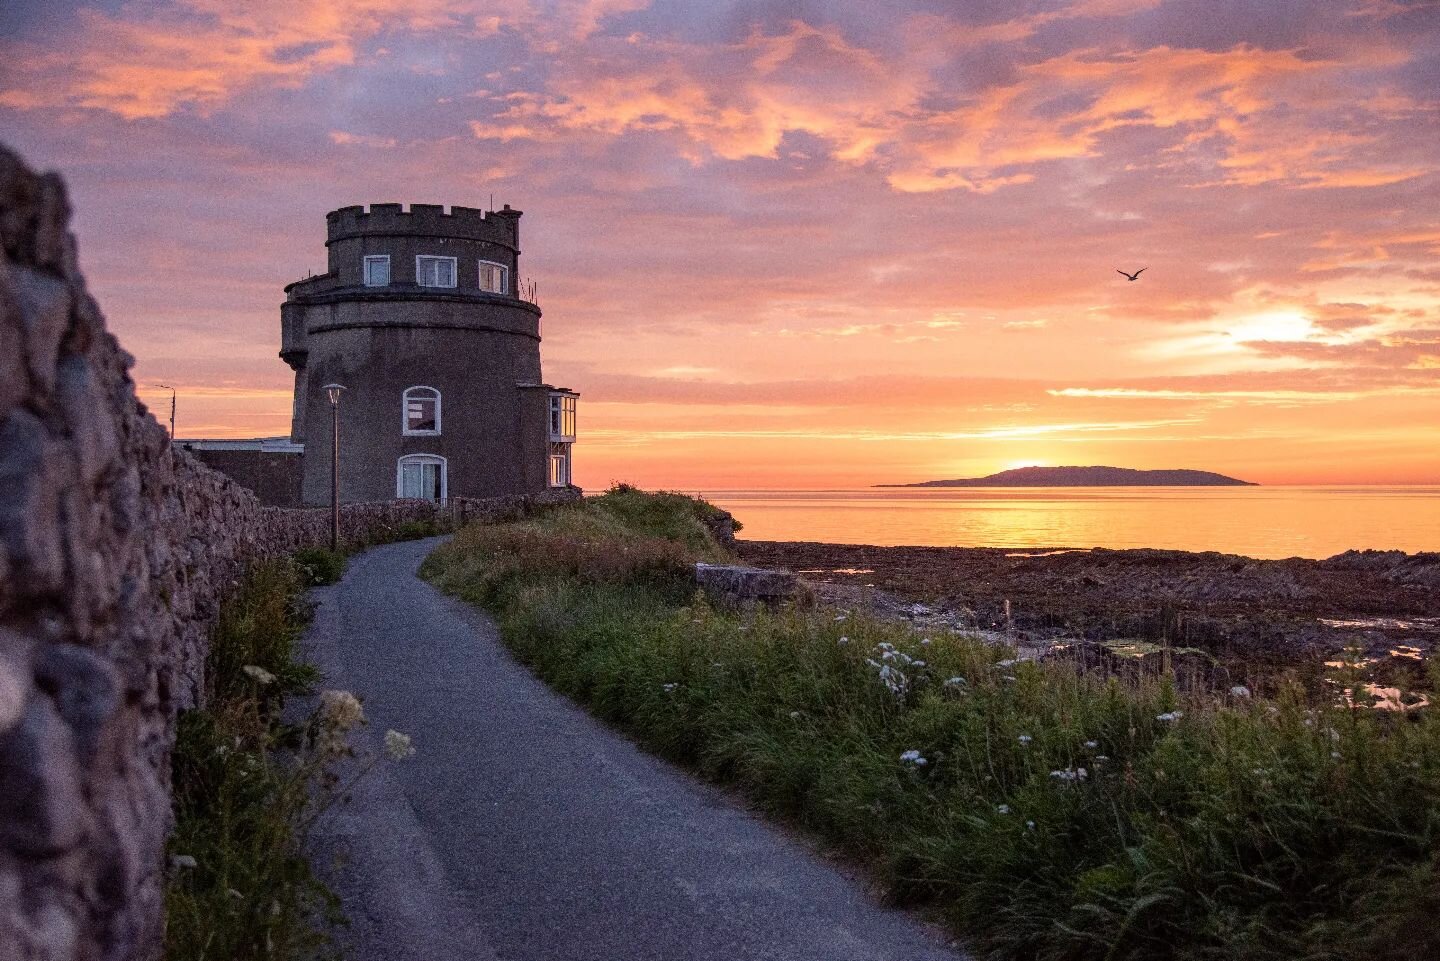 Sunrise in Portmarnock 🌞

#Portmarnock #martellotower #Dublin #Ireland #irish #instagram #loveireland #discoverireland #tourismireland #irelandaily #irish_daily #ireland_gram #inspireland #insta_ireland #ig_ireland #travelireland #irishphotography #